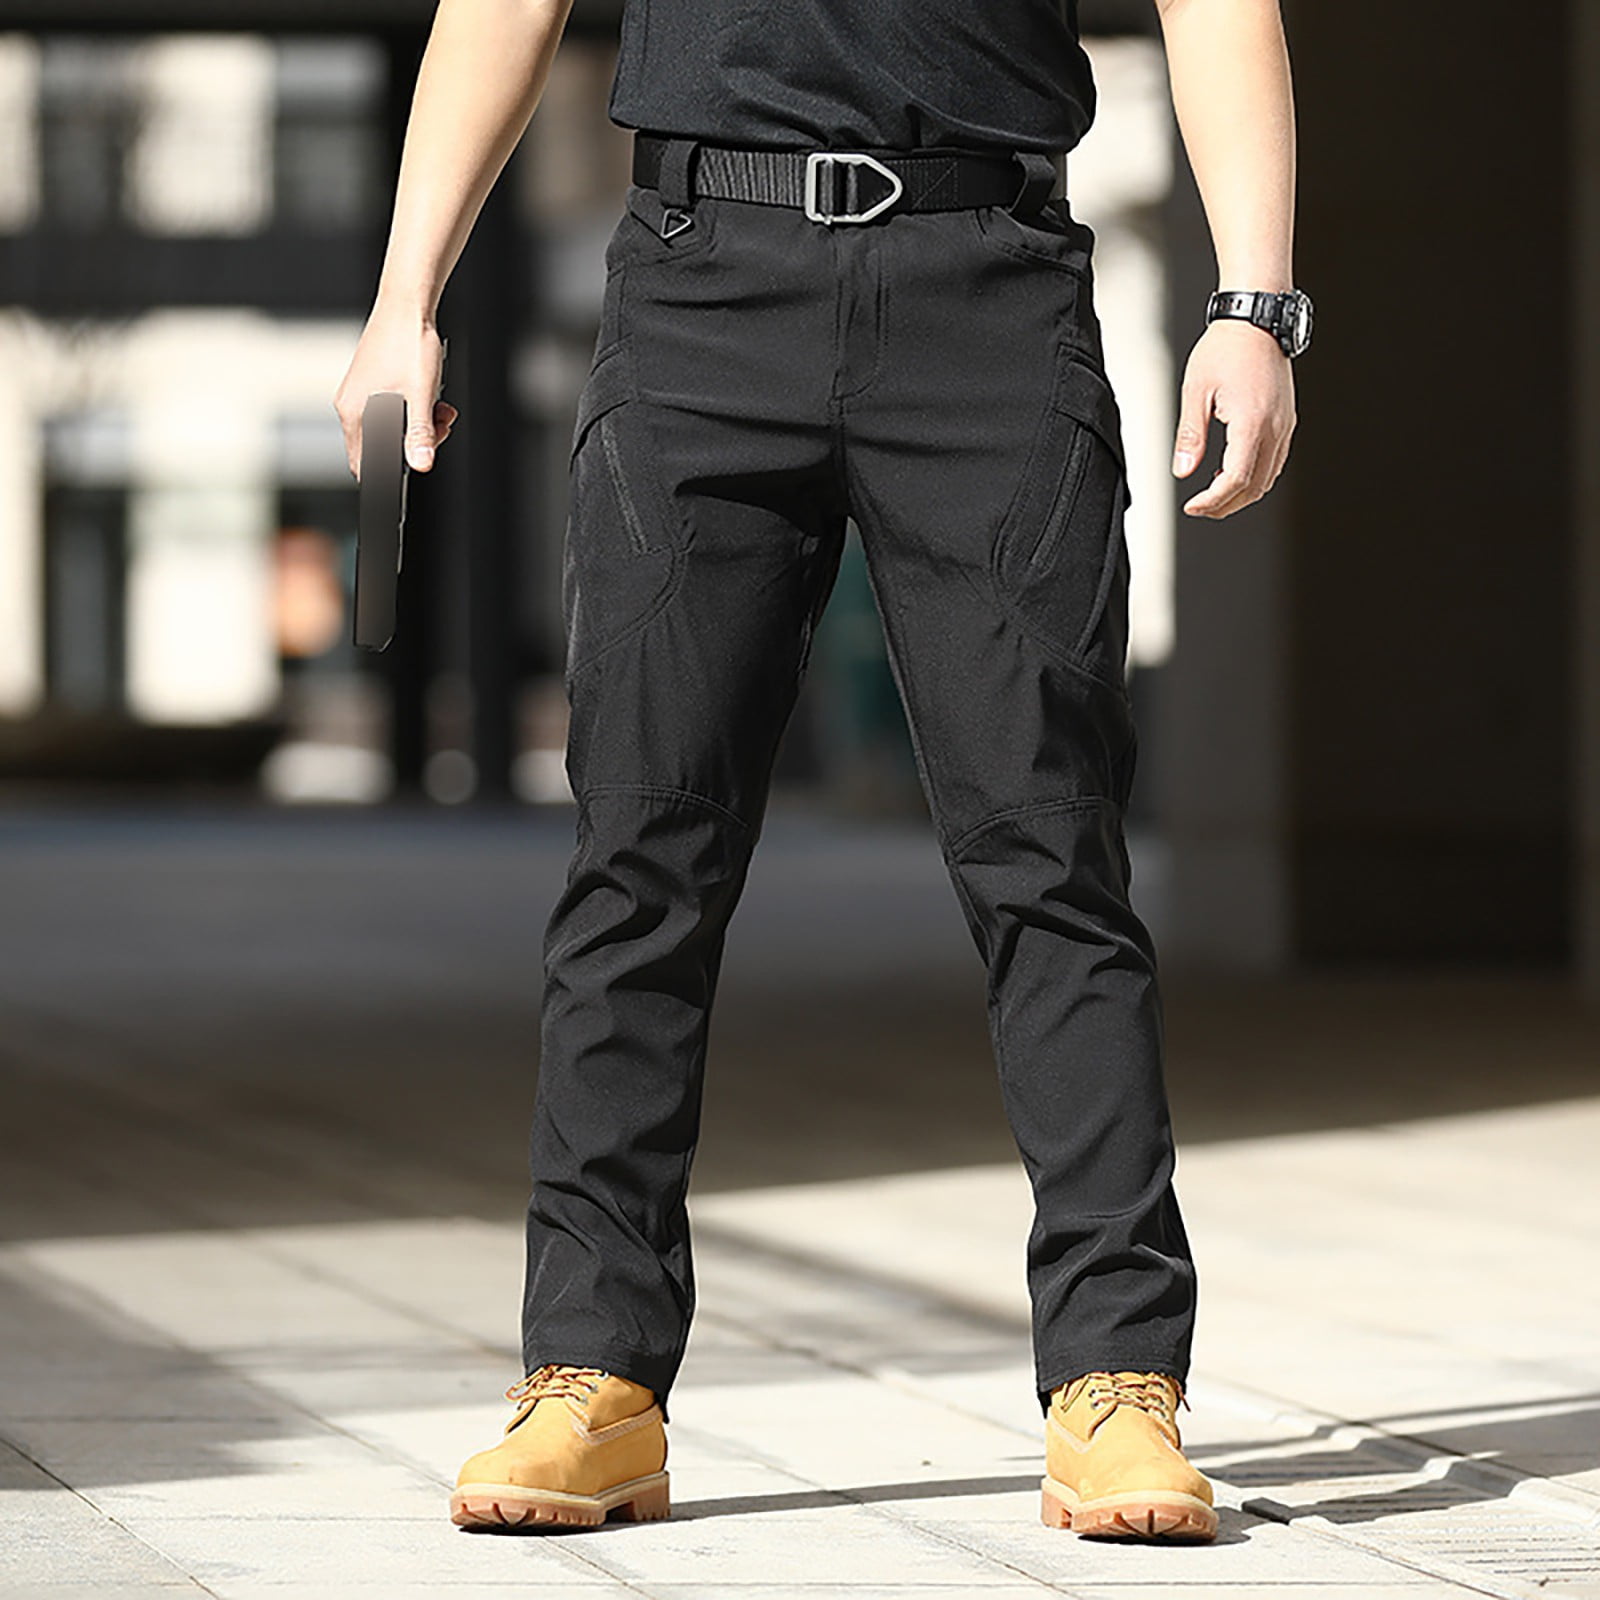 Noarlalf Cargo Pants for Men Men's Solid Color Outdoor Stretch Pant ...